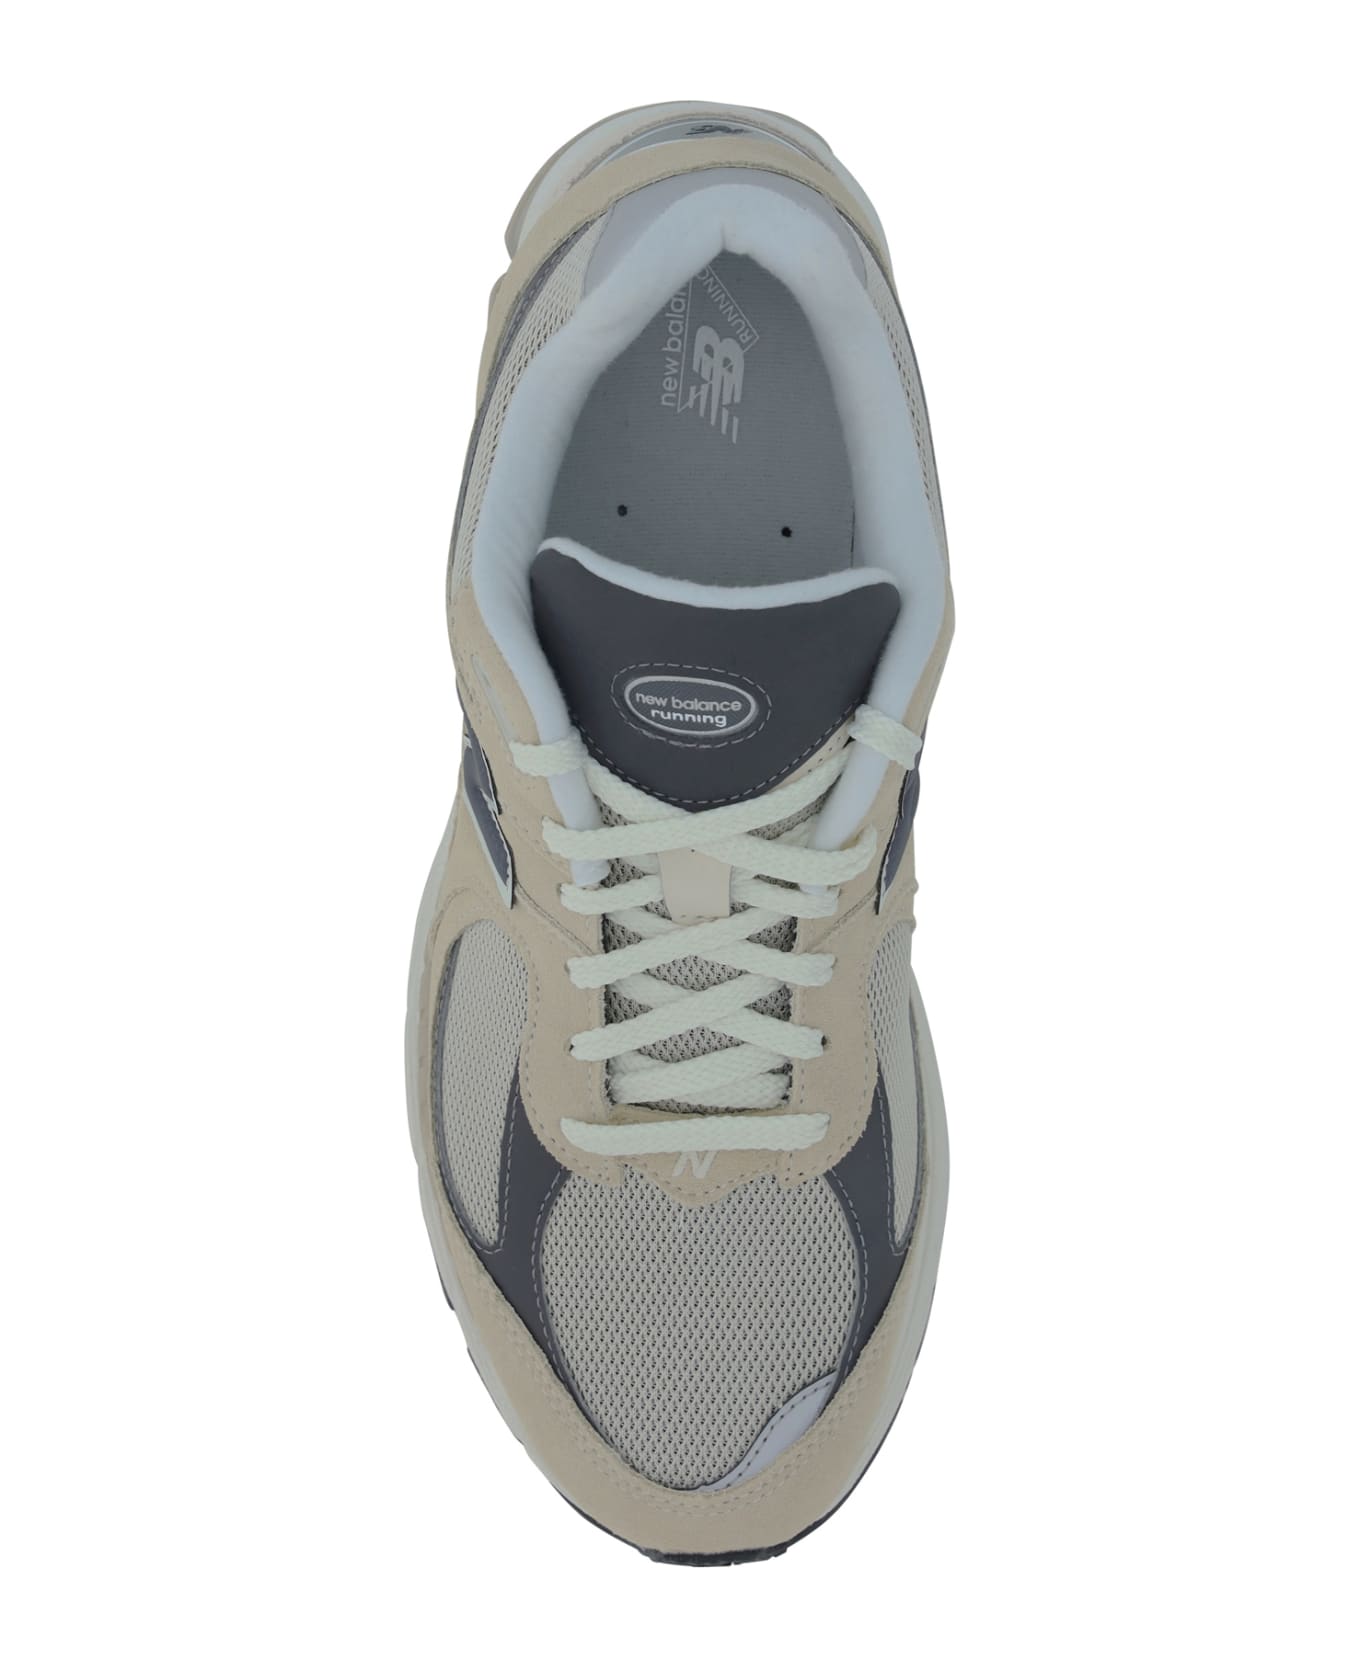 New Balance Sneakers - Sandstone